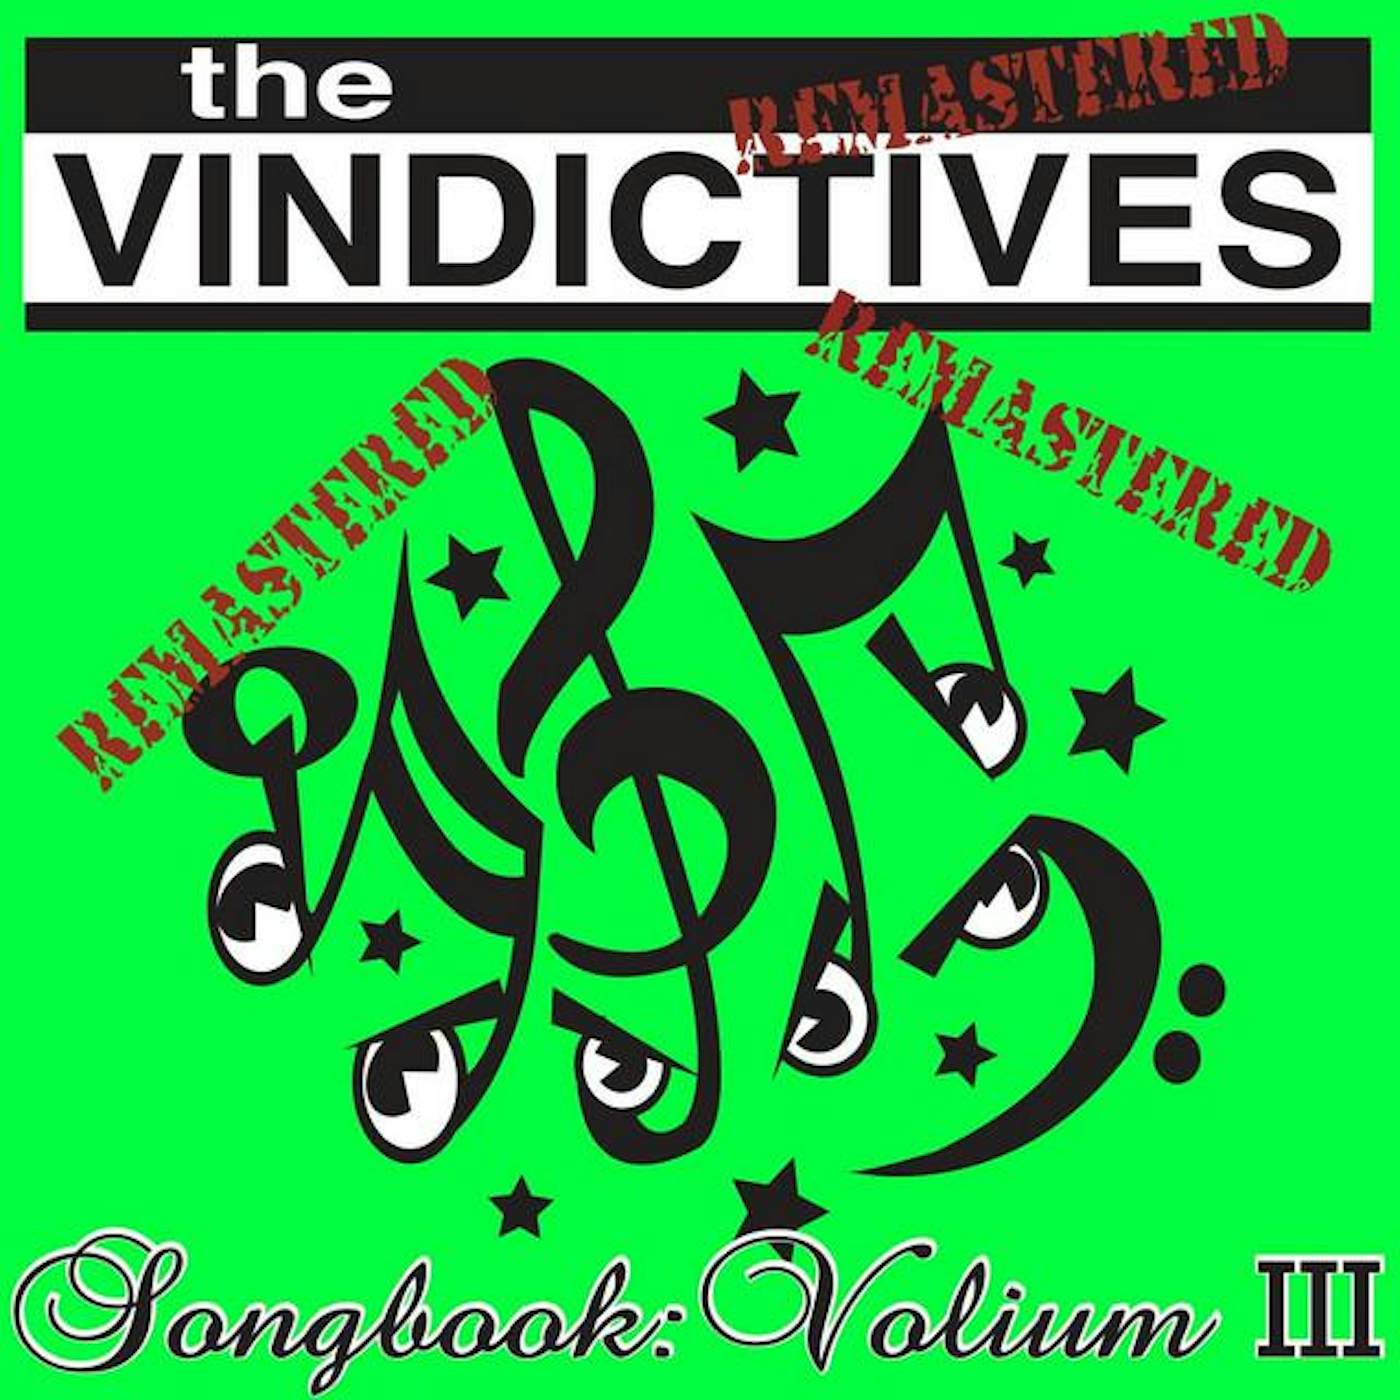 The Vindictives